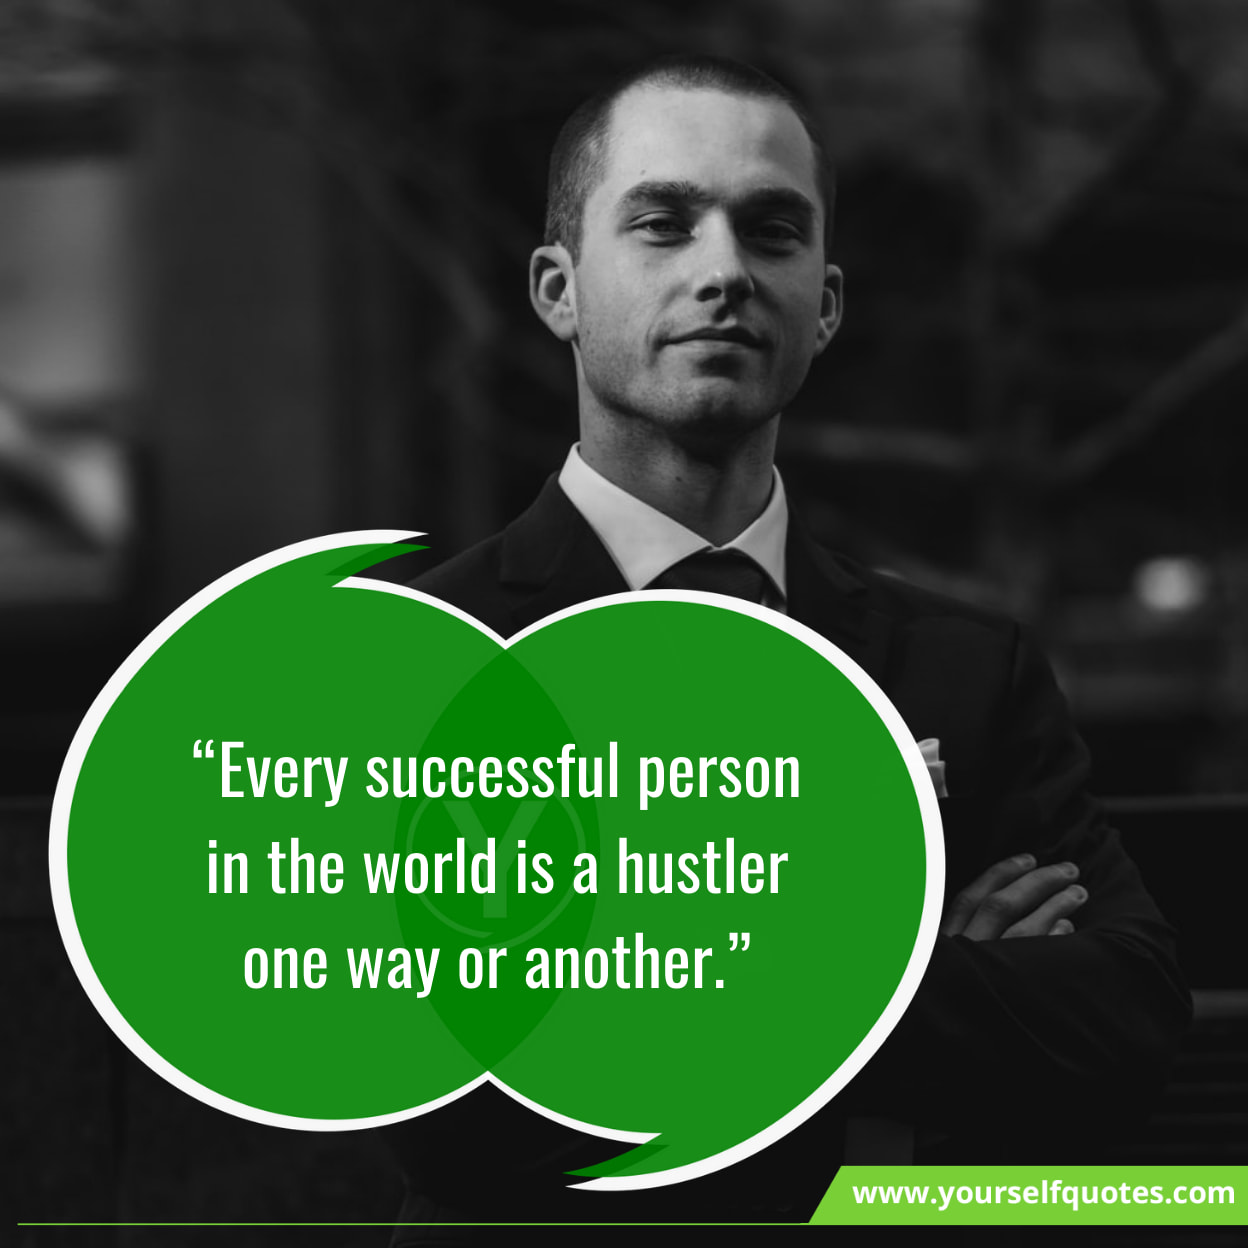 Hustle Quotes About Success